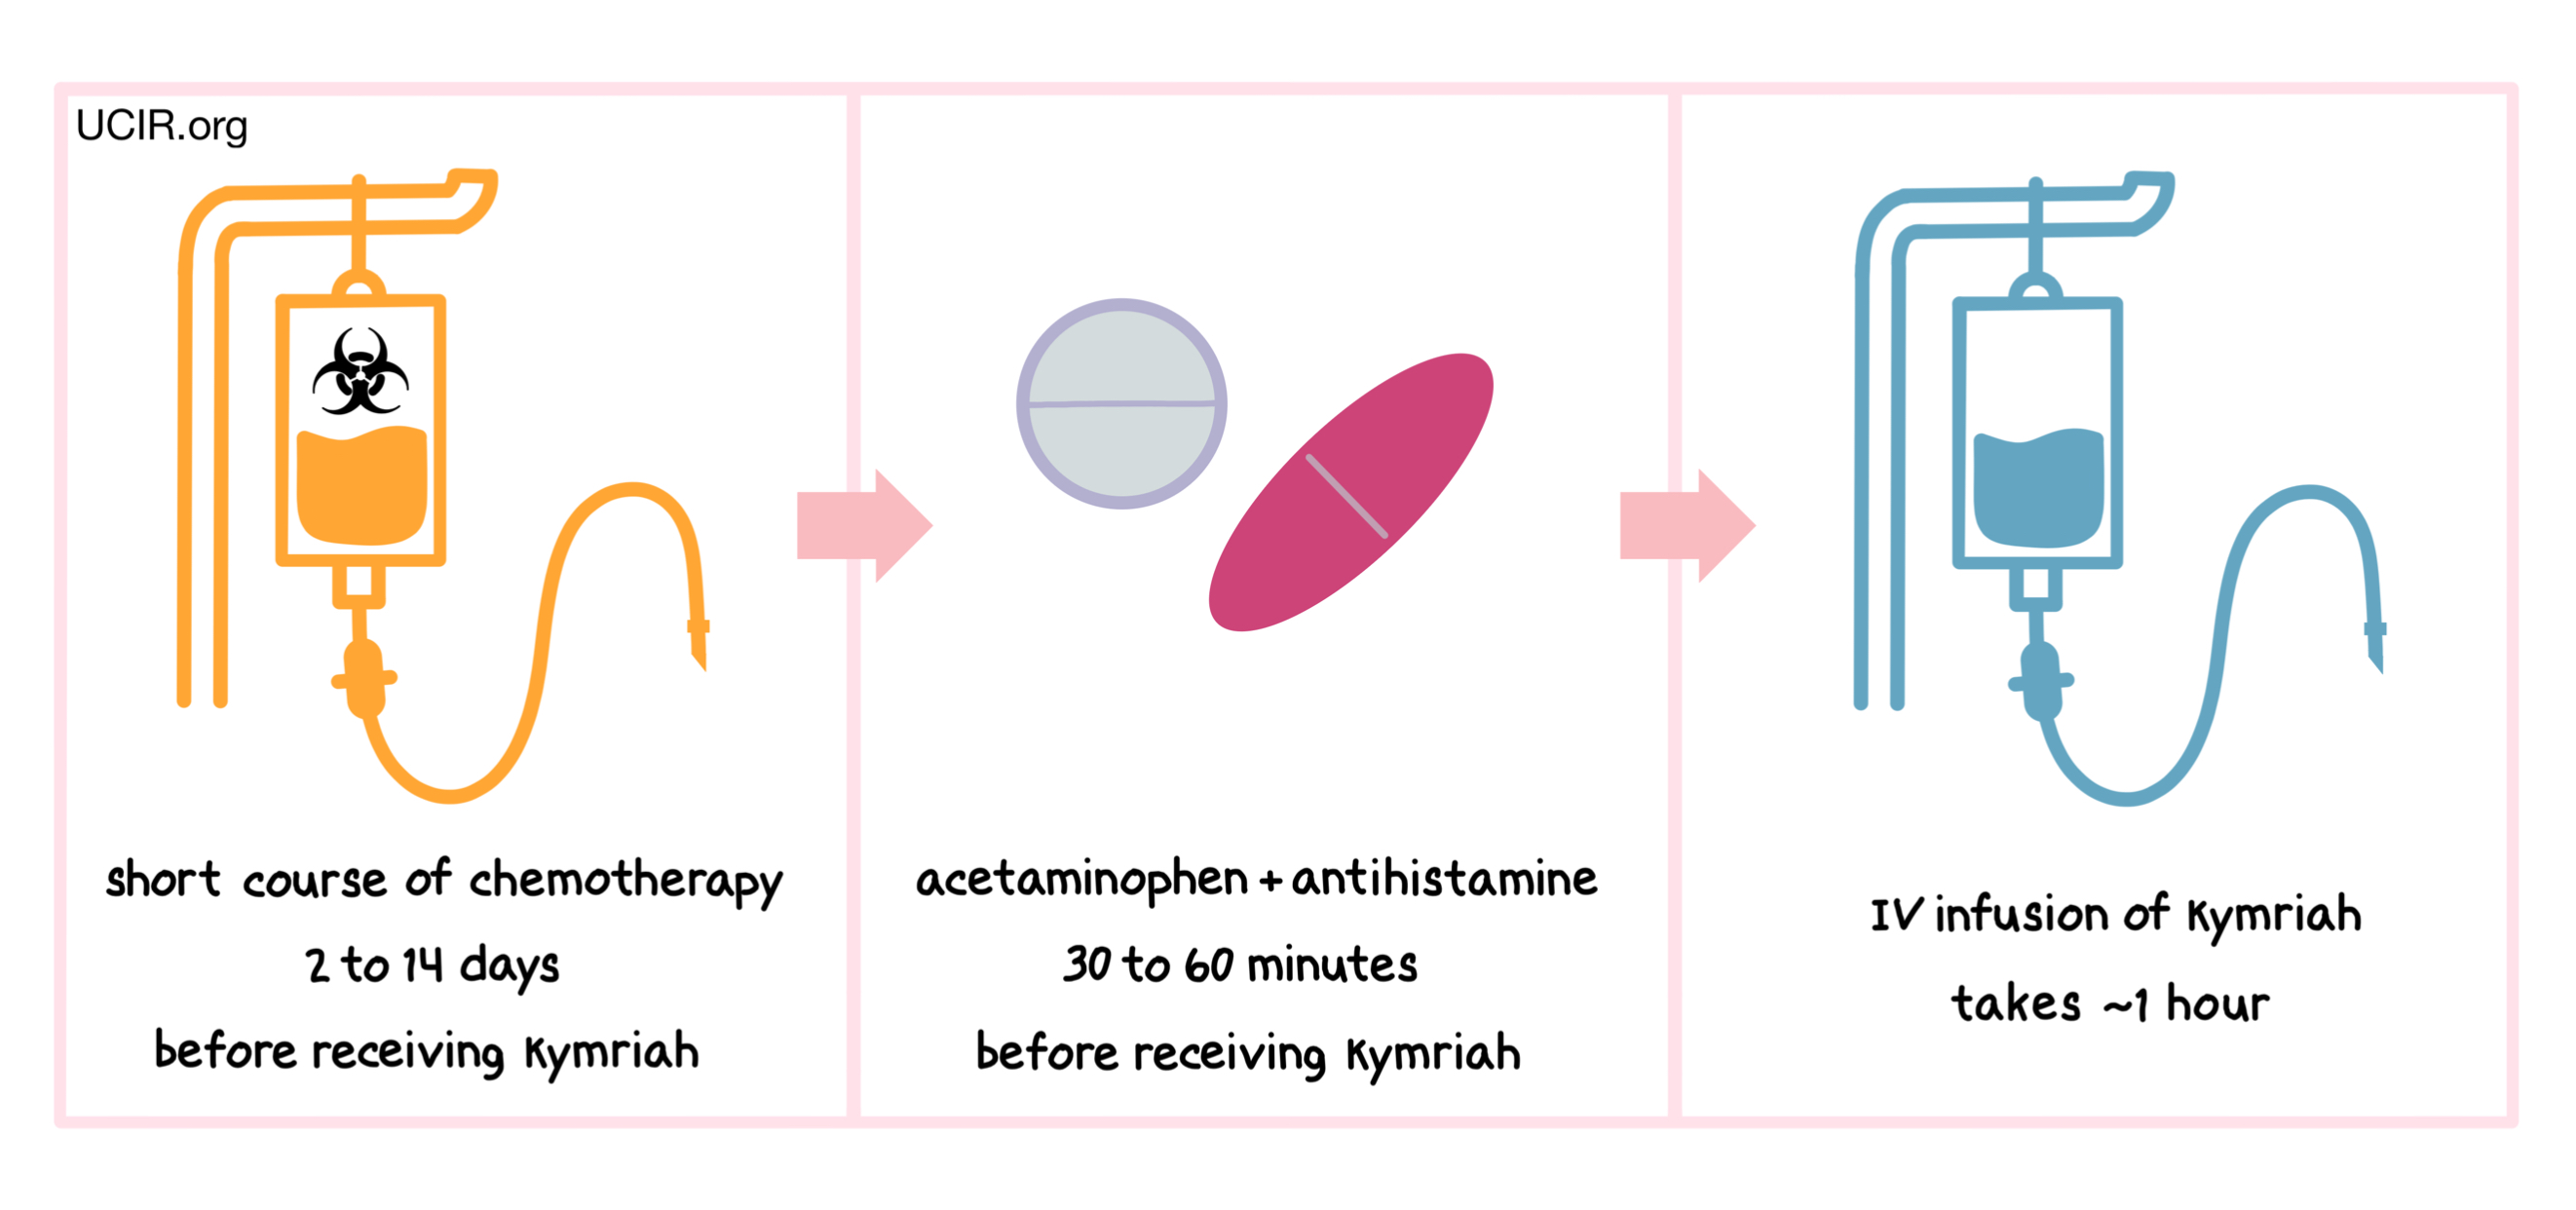 Timeline illustration of the Kymirah process